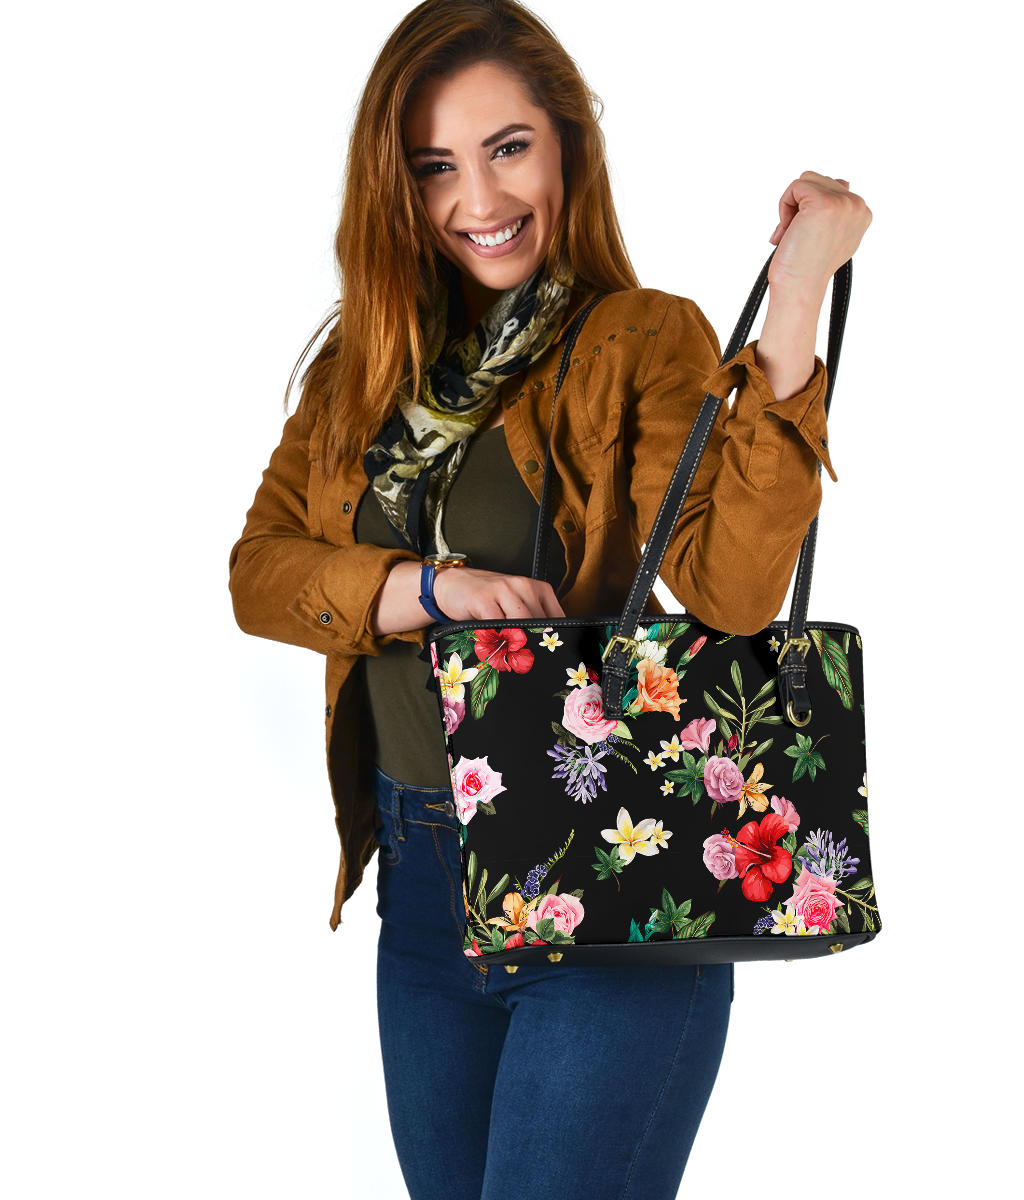 Women's Floral Black Handbags, Bags